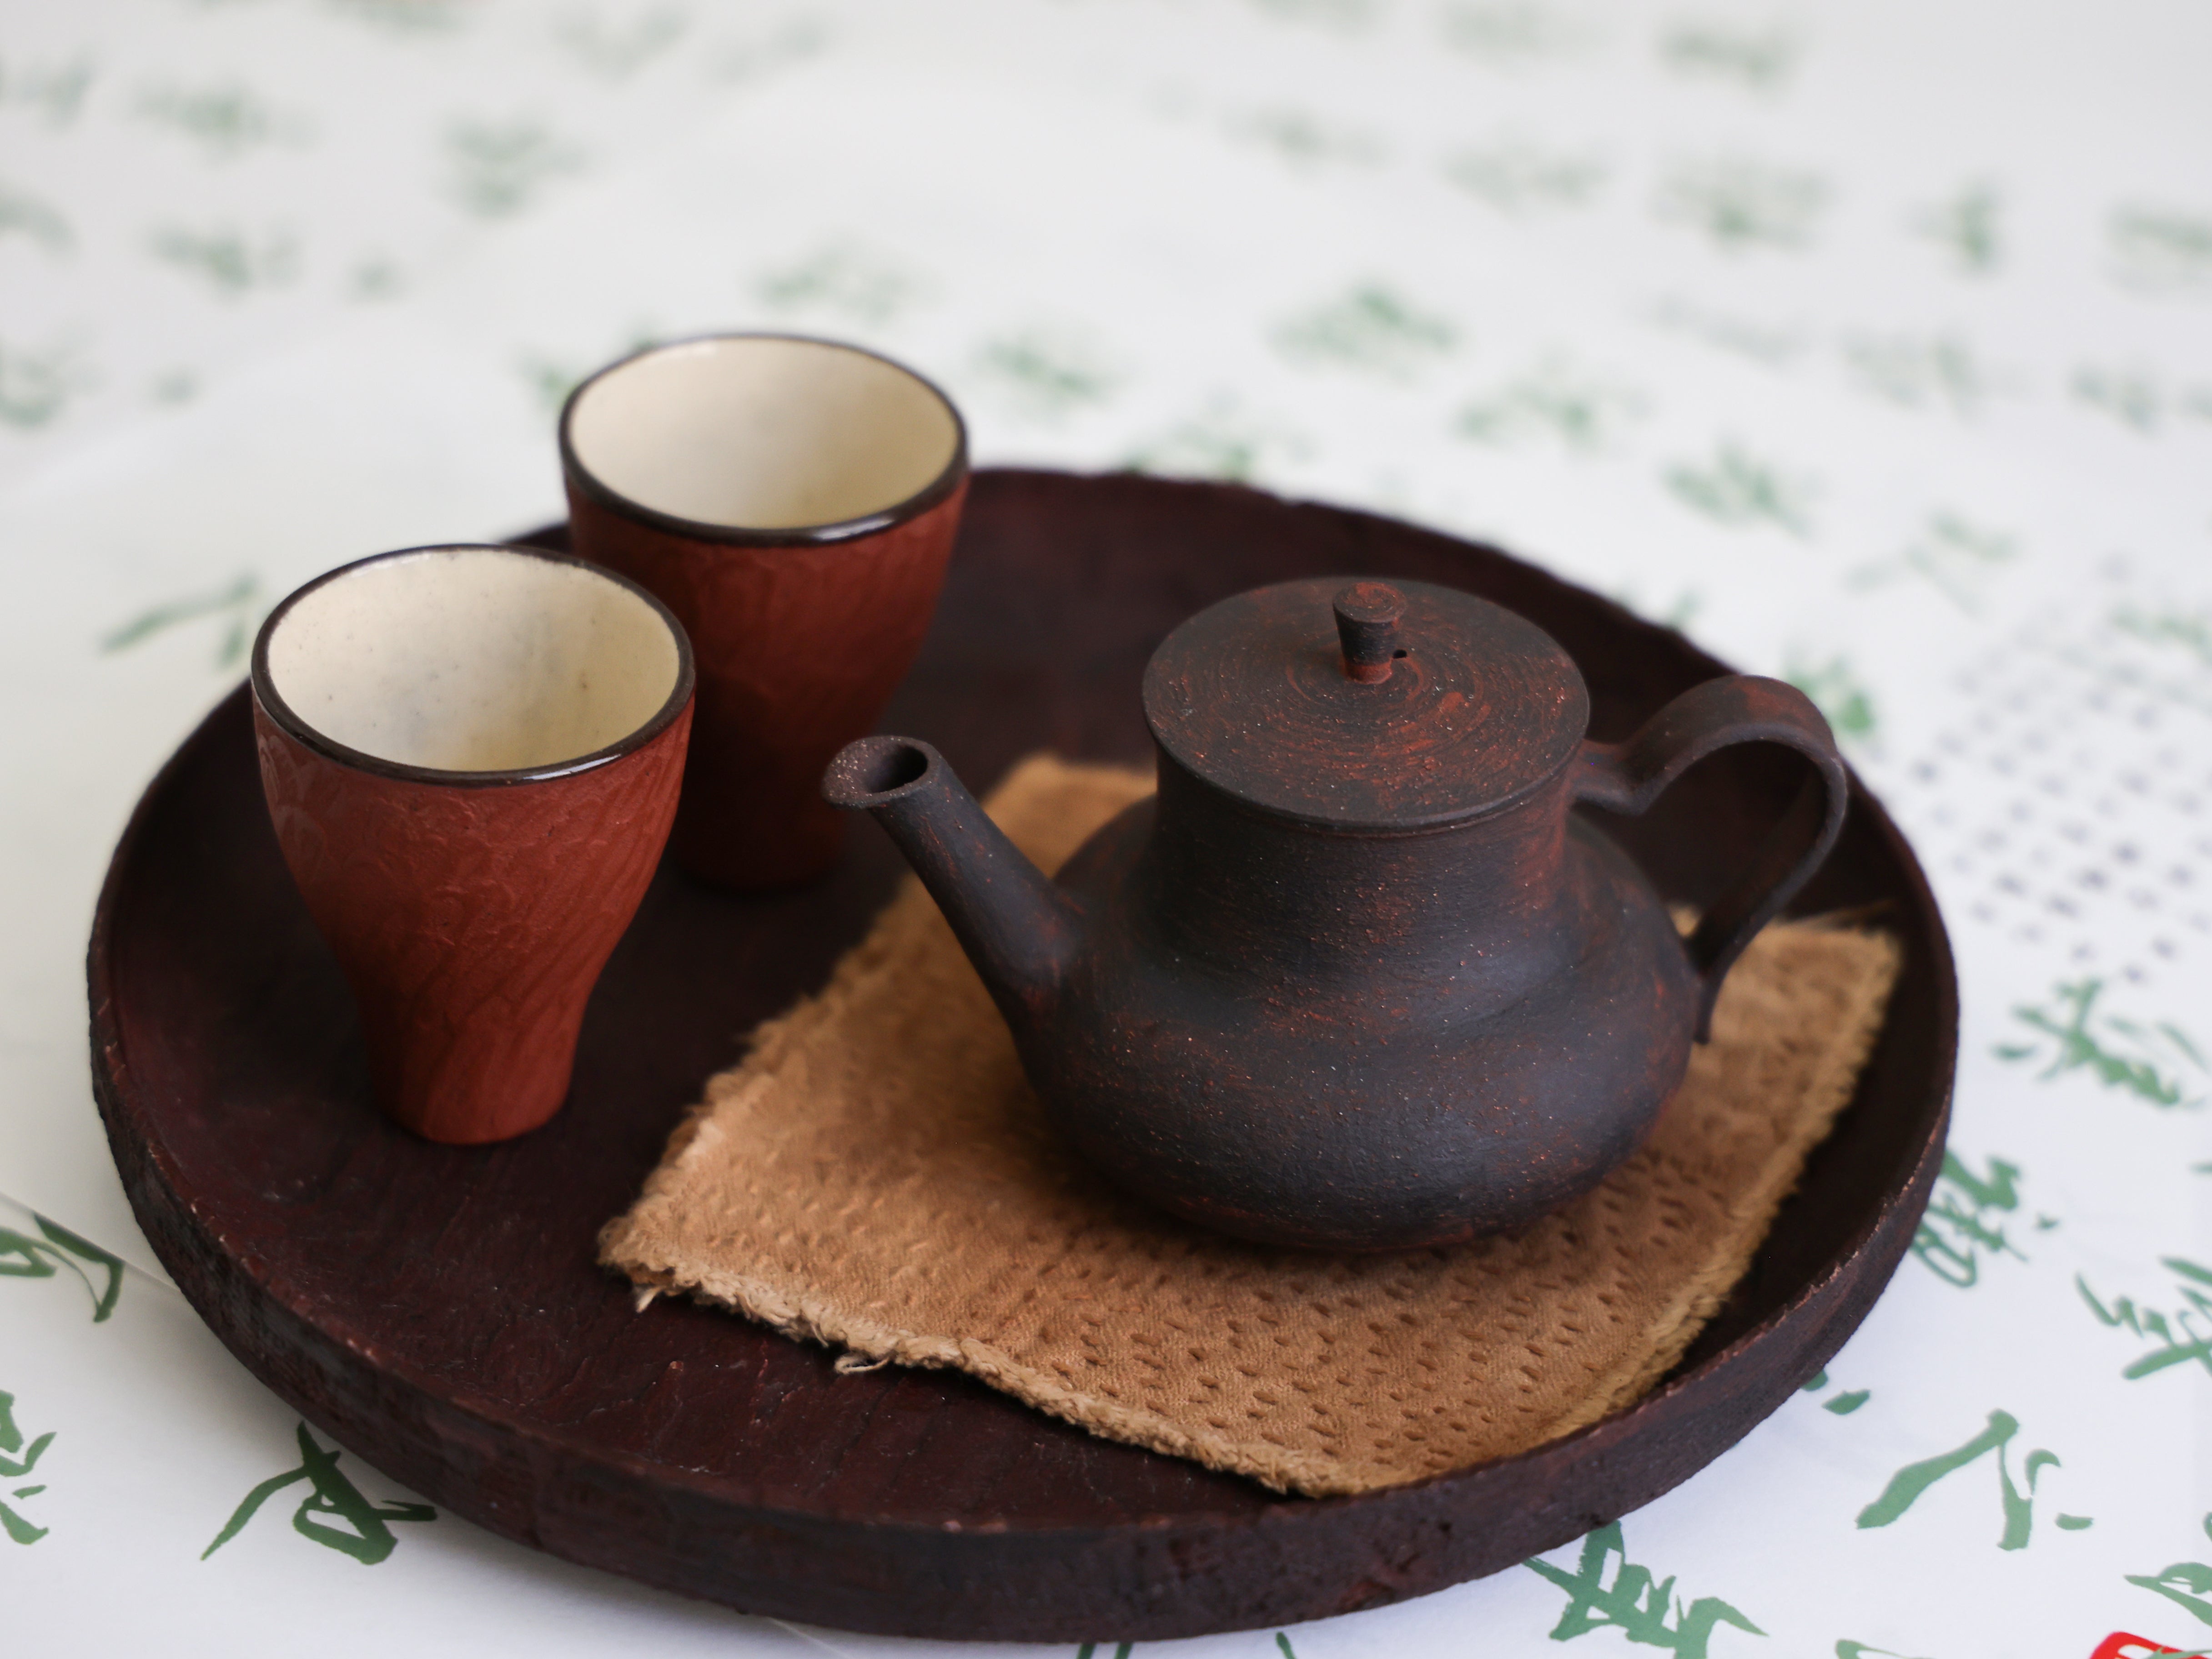 Master Yu Zisha Teapot #015